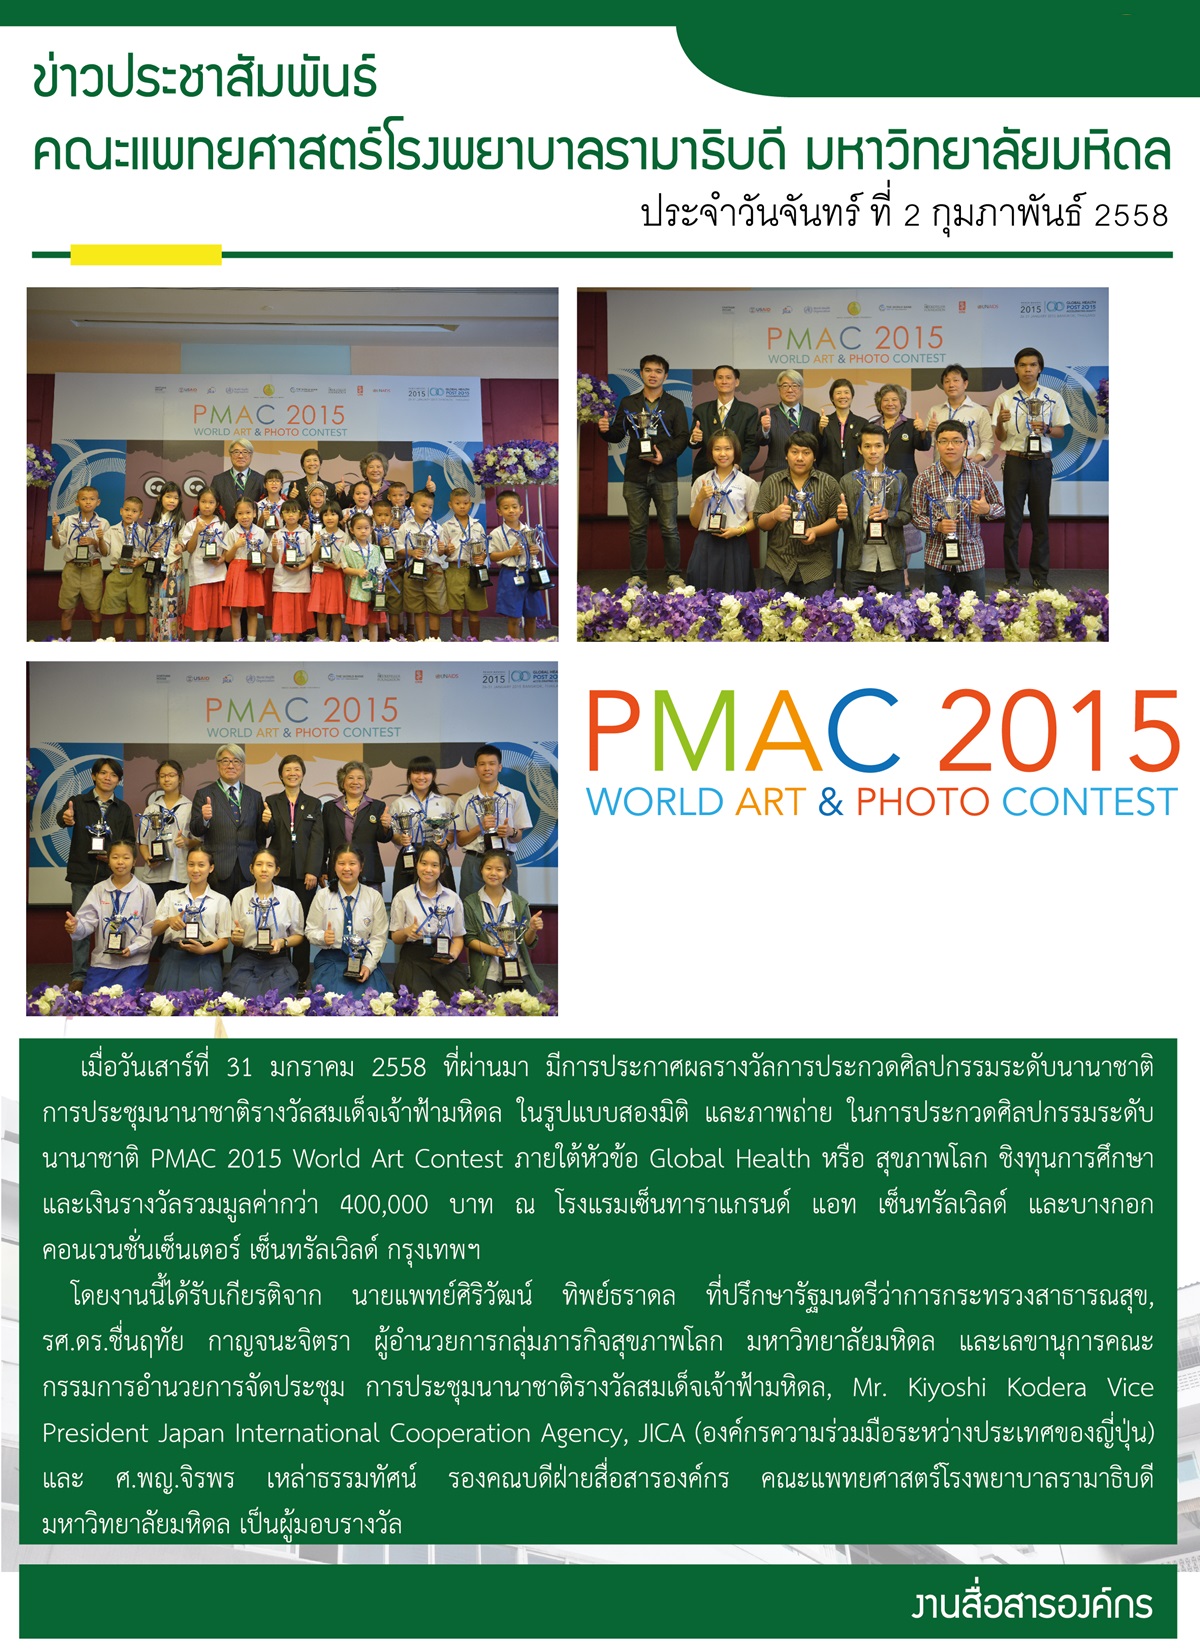 PMAC 2015 WORLD ART & PHOTO CONTEST